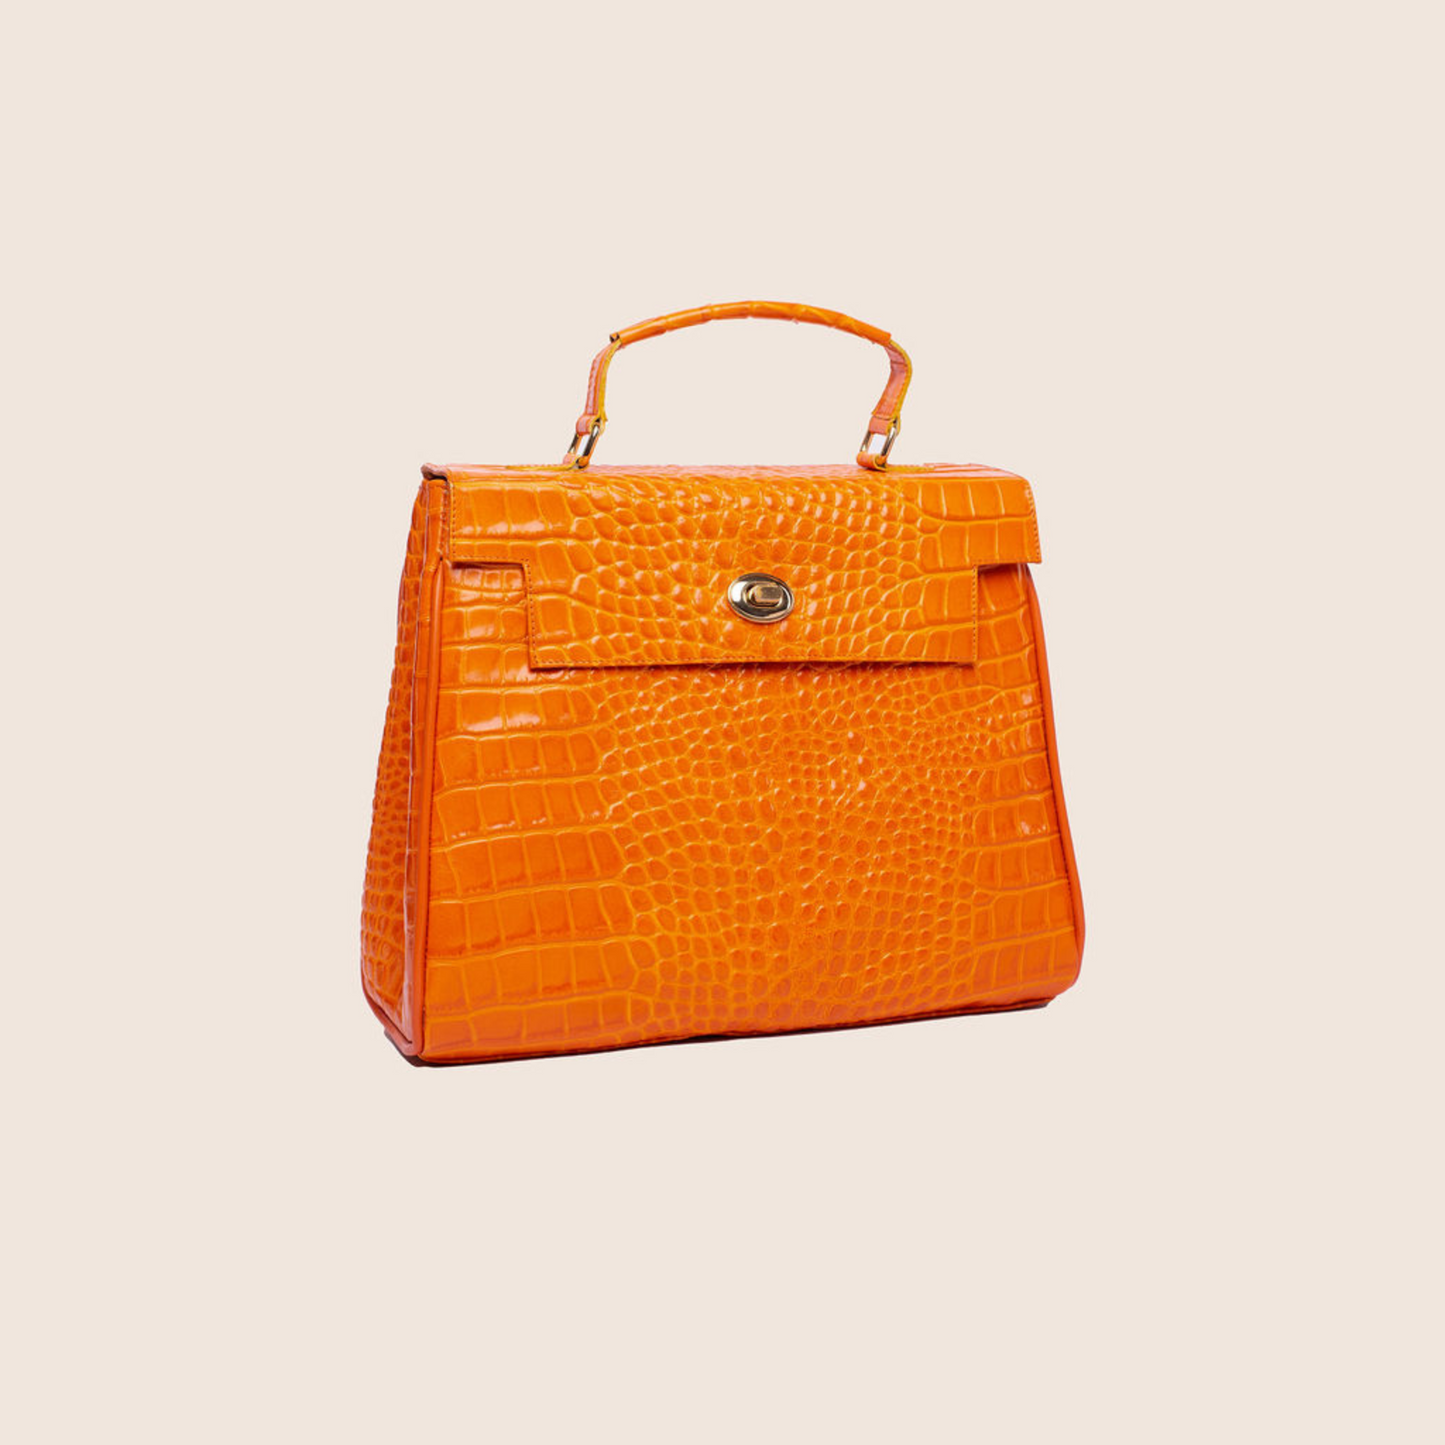 Sylvie satchel bag in orange crocodile print leather